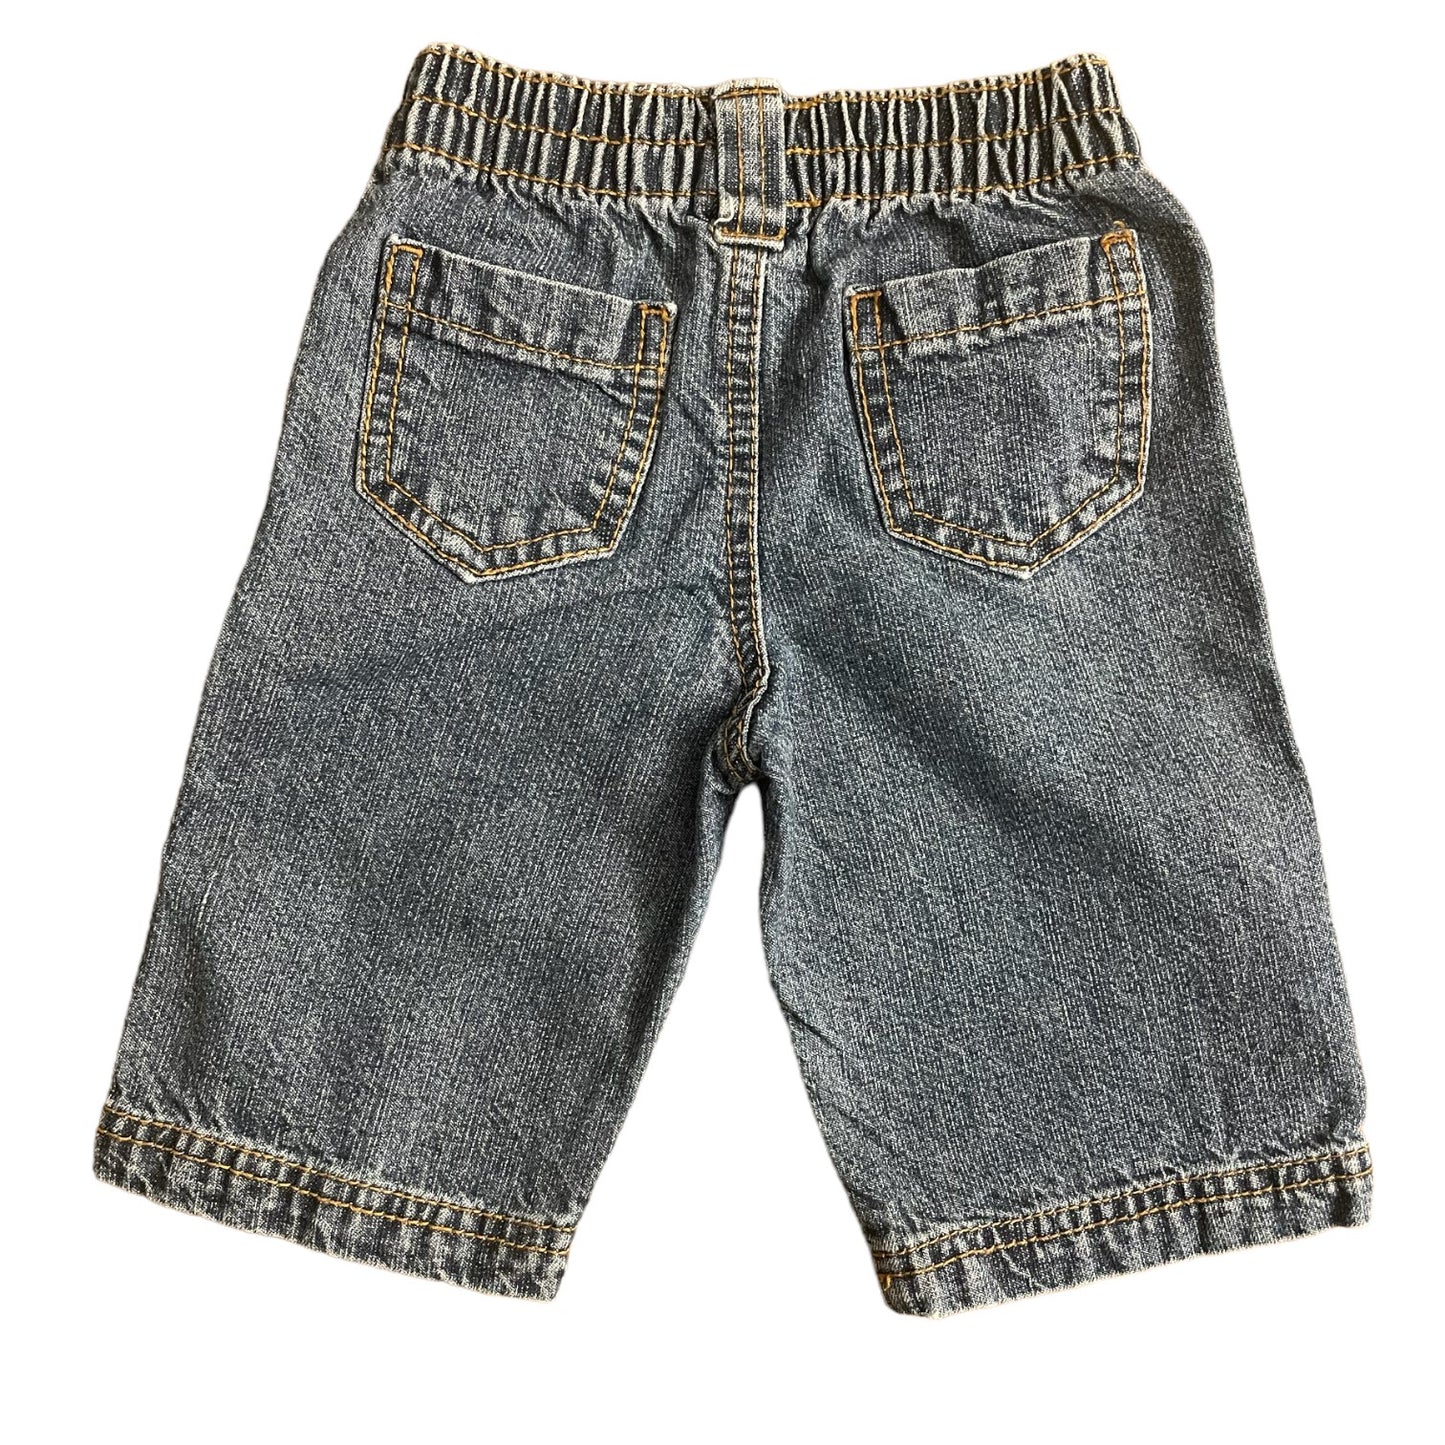 Circo Infant Boys Jeans 6M